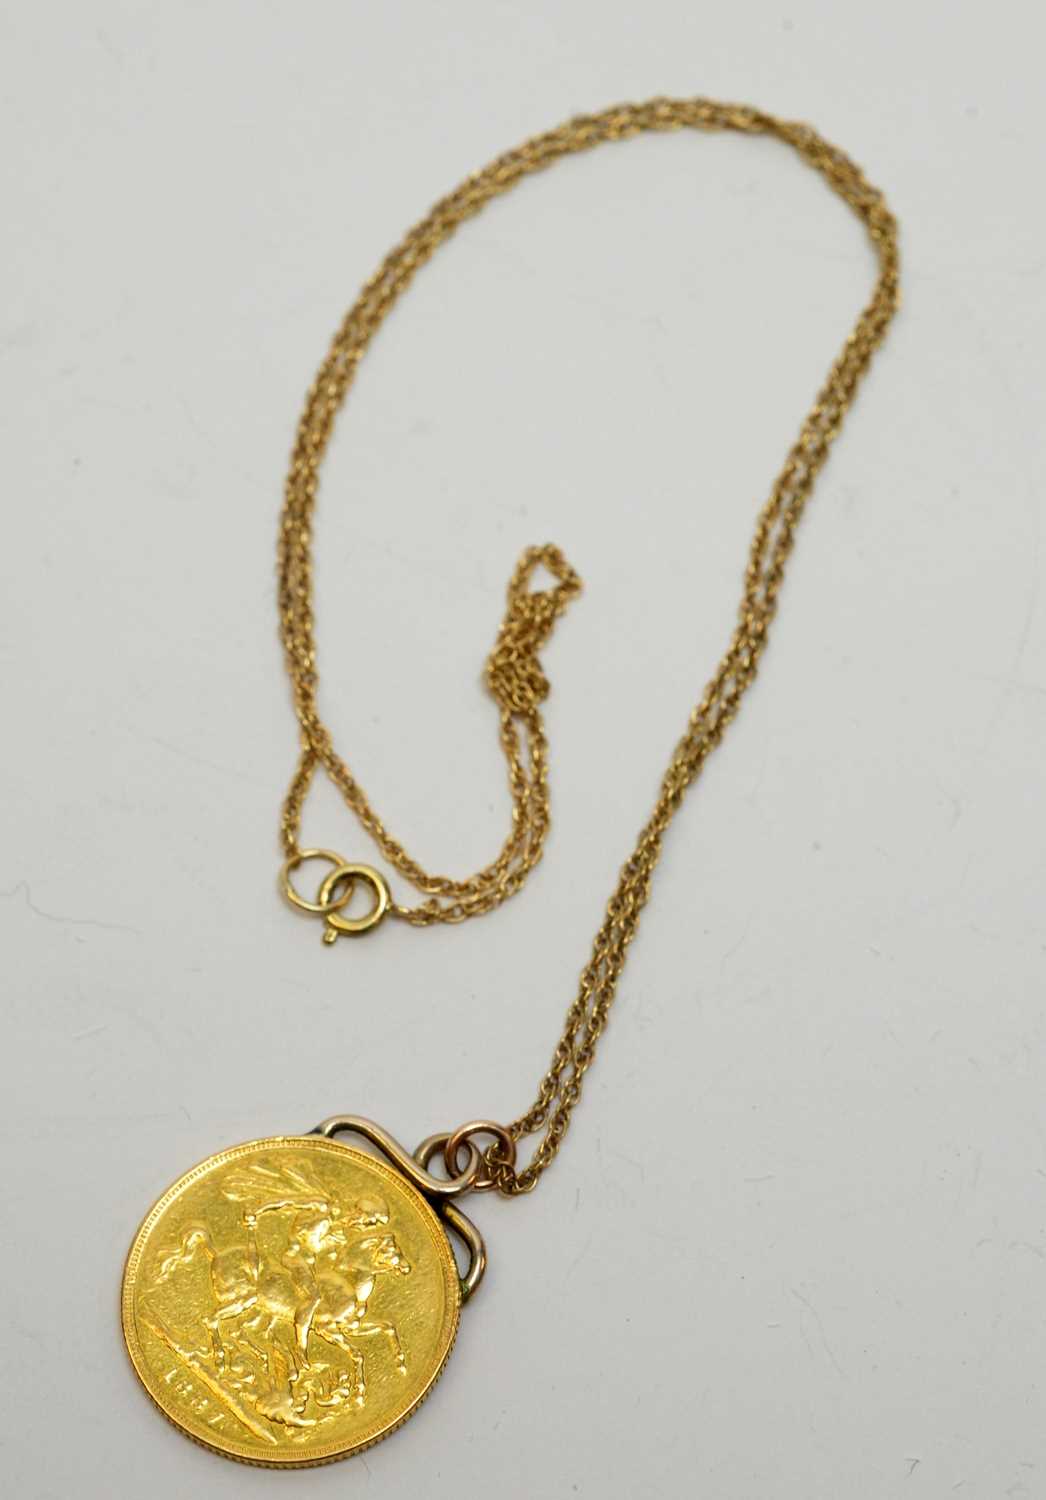 Lot 223 - A Queen Victoria gold sovereign pendant